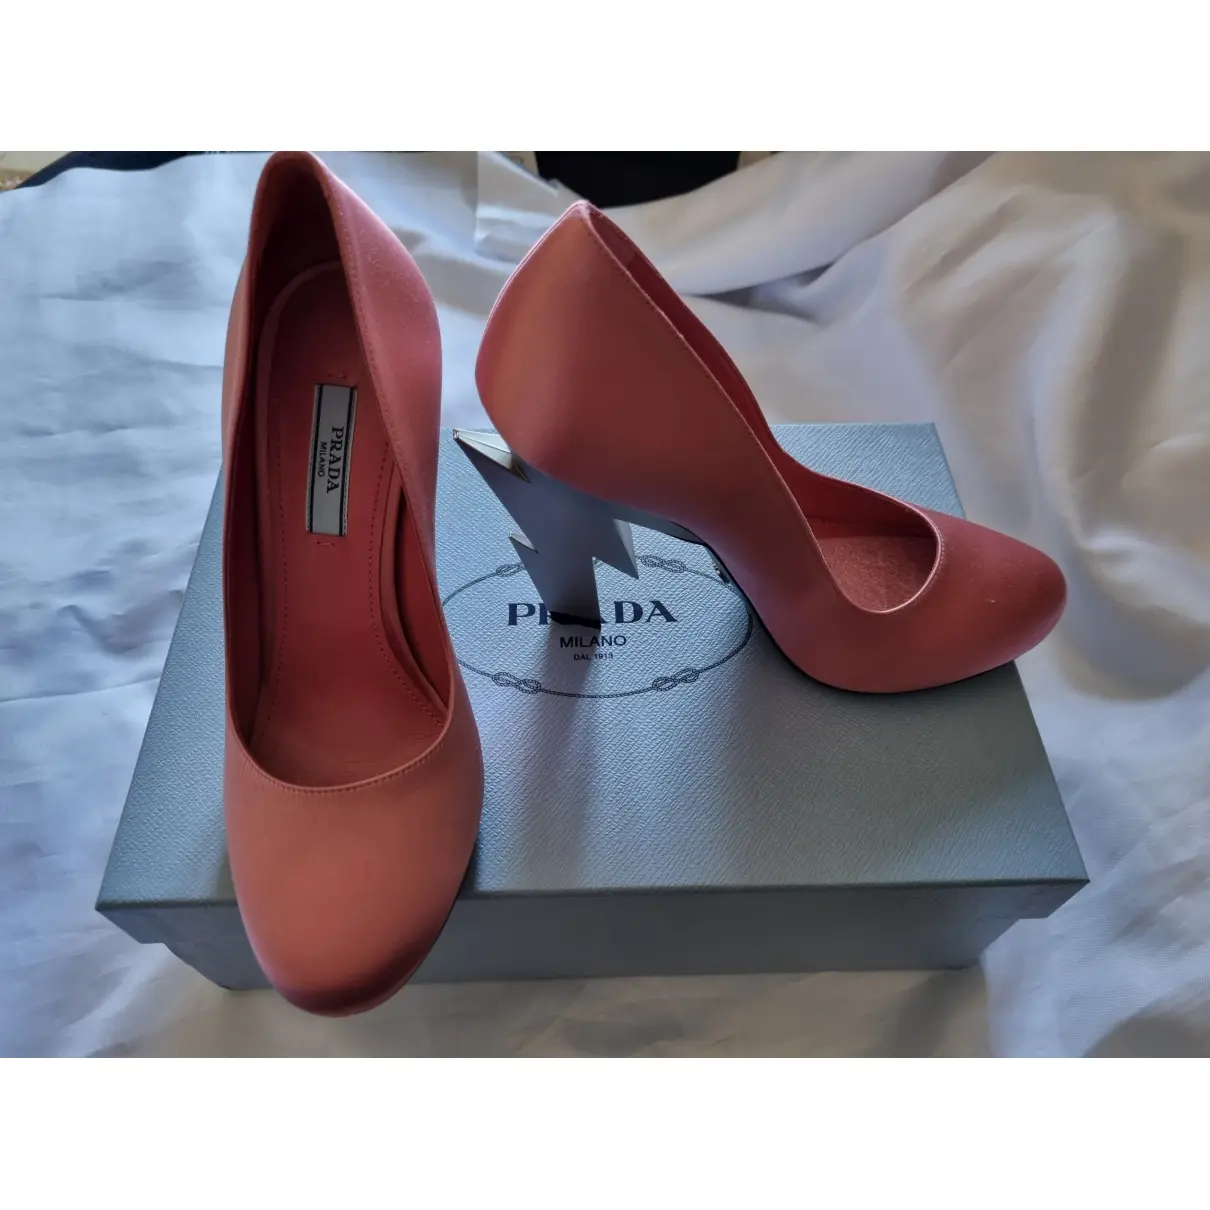 Buy Prada Lightning heels online